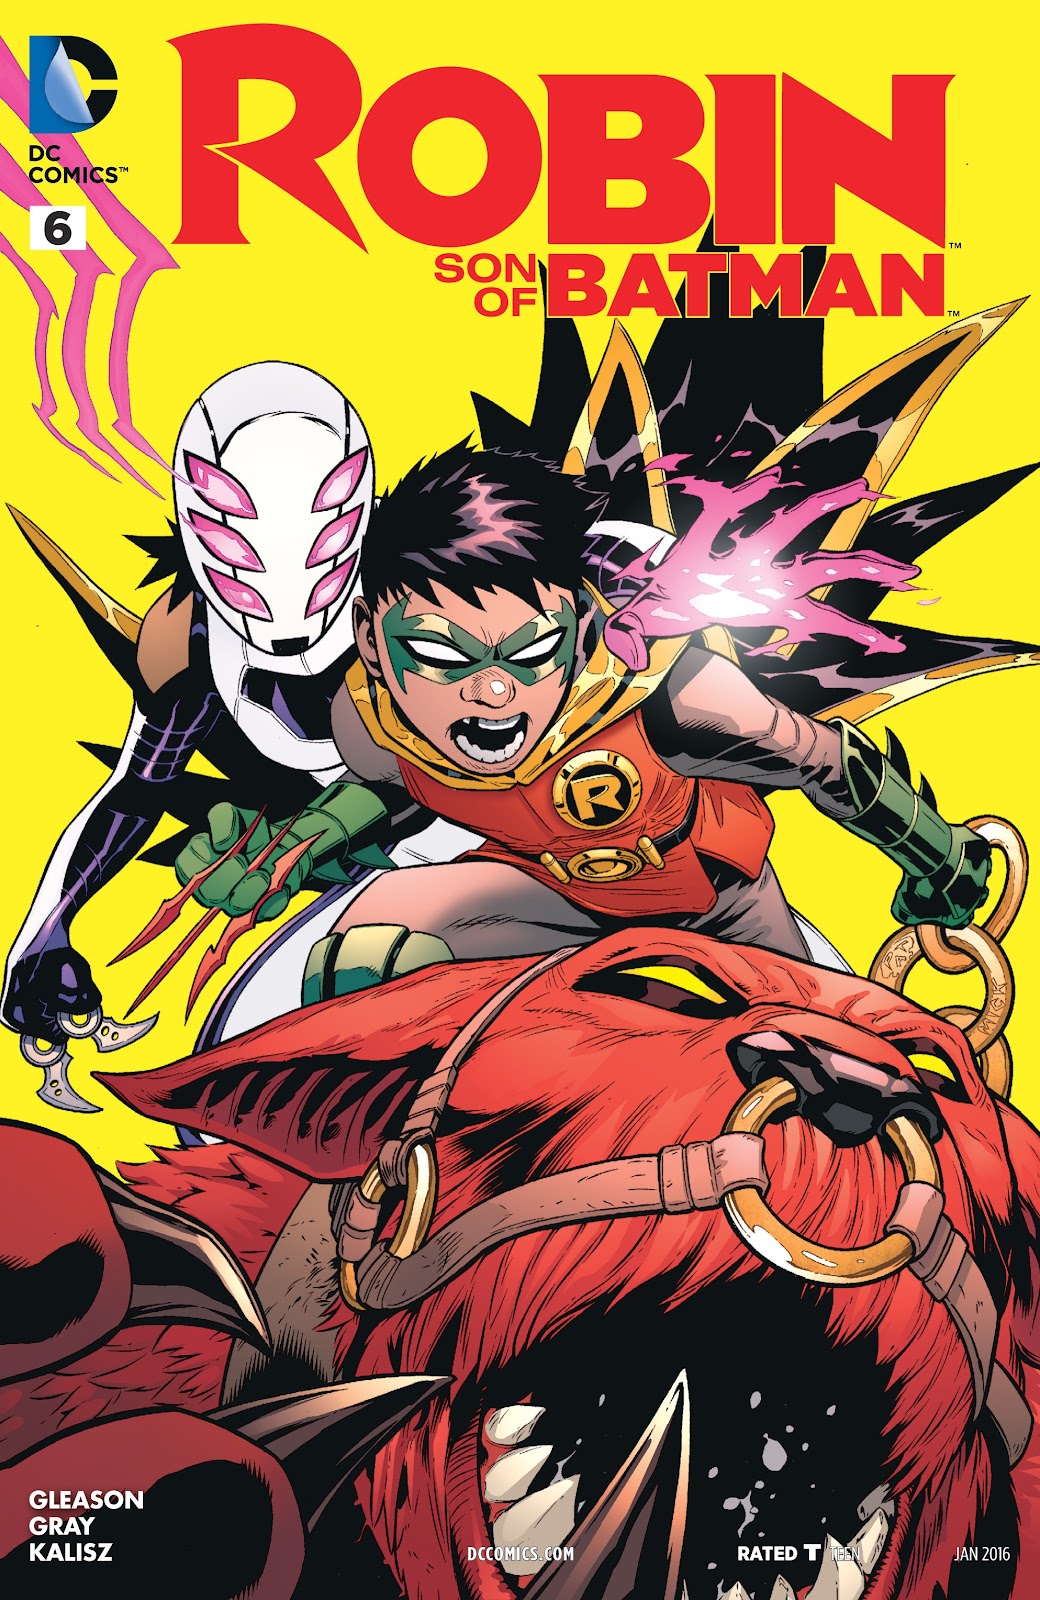 Read Robin: Son of Batman Issue #6 Online